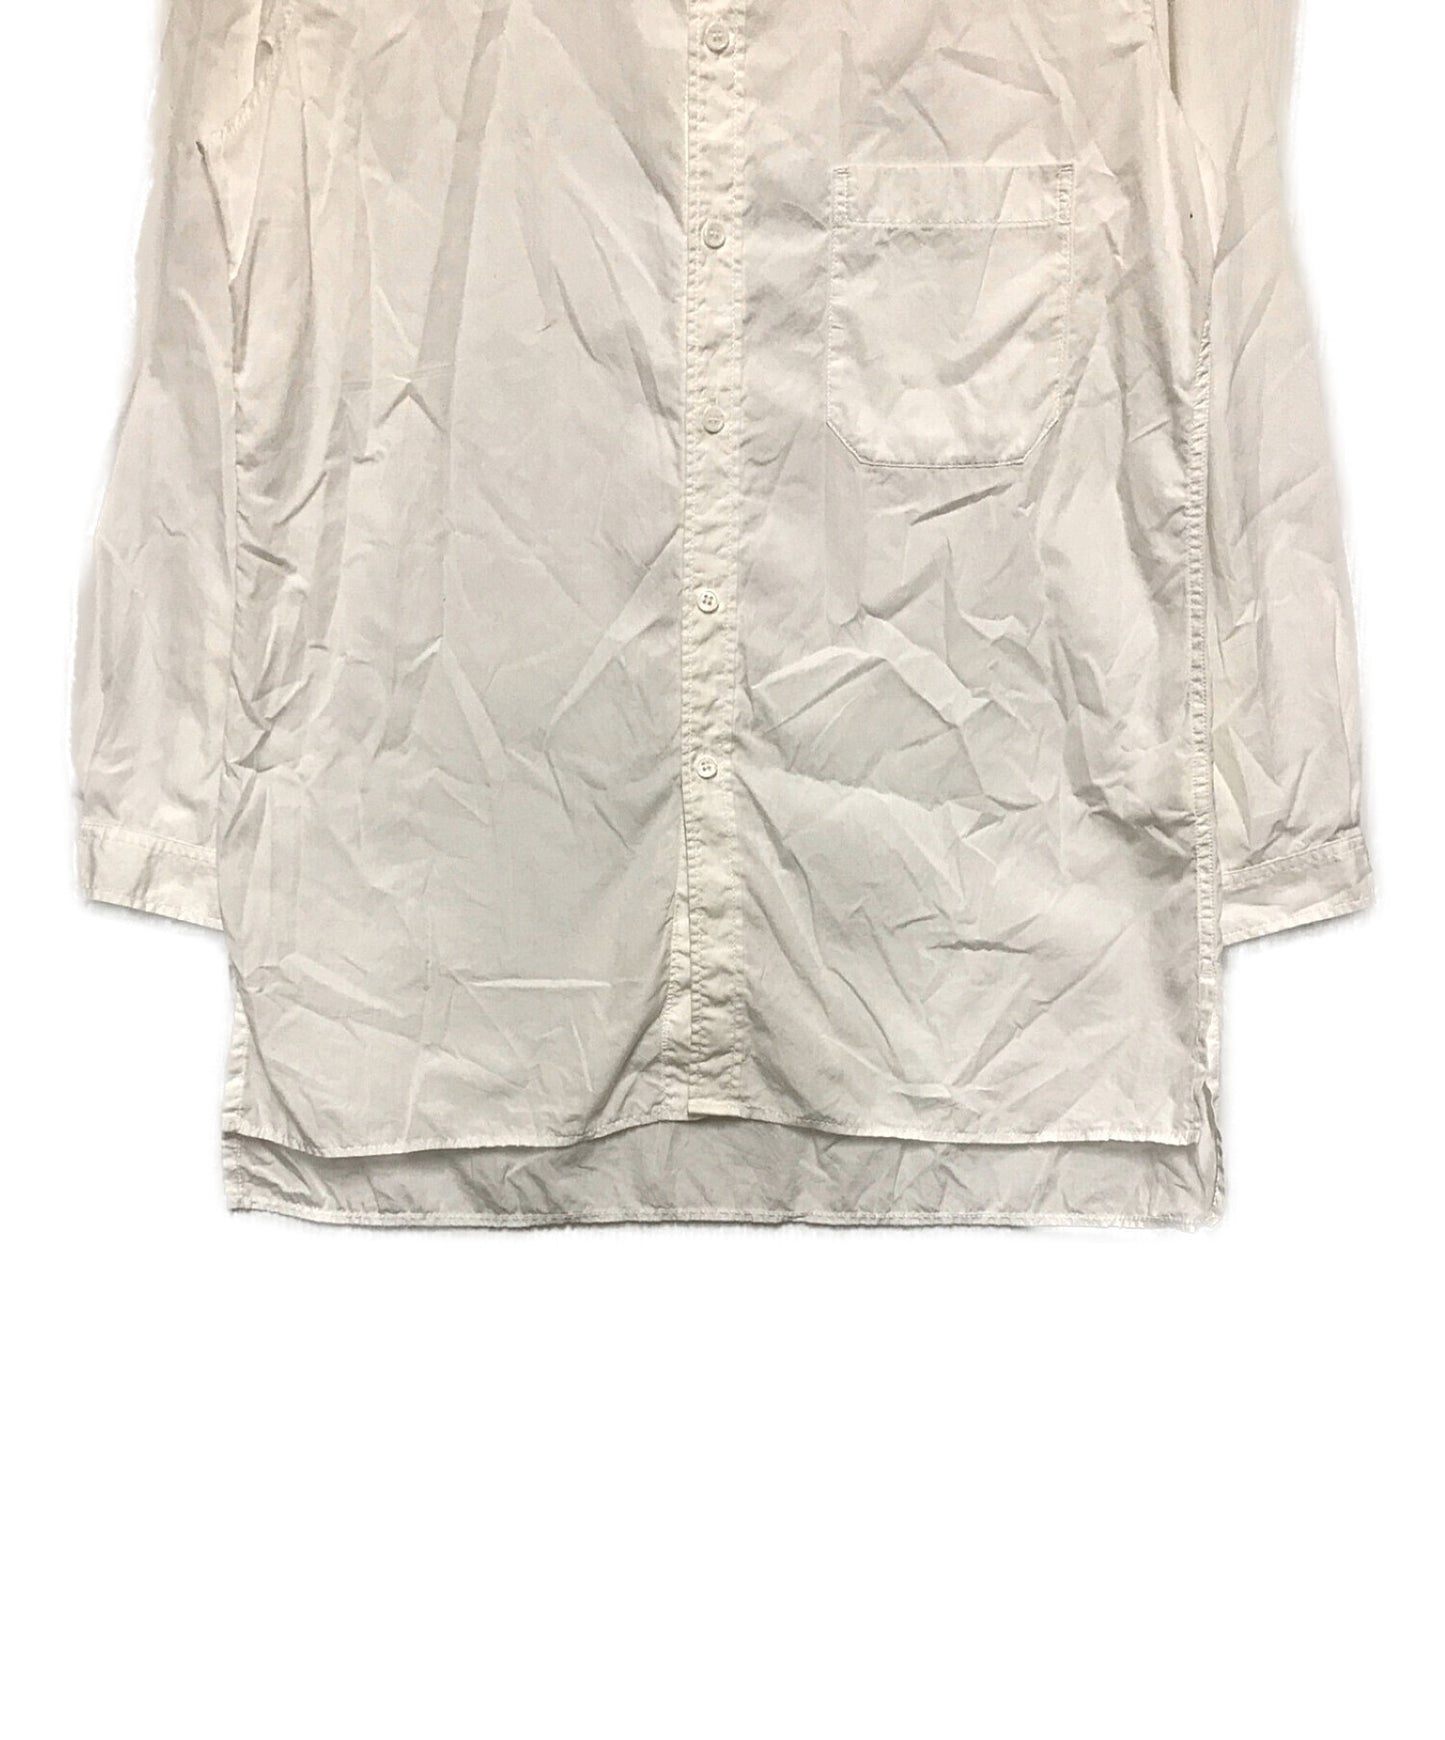 Yohji Yamamoto Pour Homme Long Long Collar环形衬衫，带基座项圈HR-B05-001